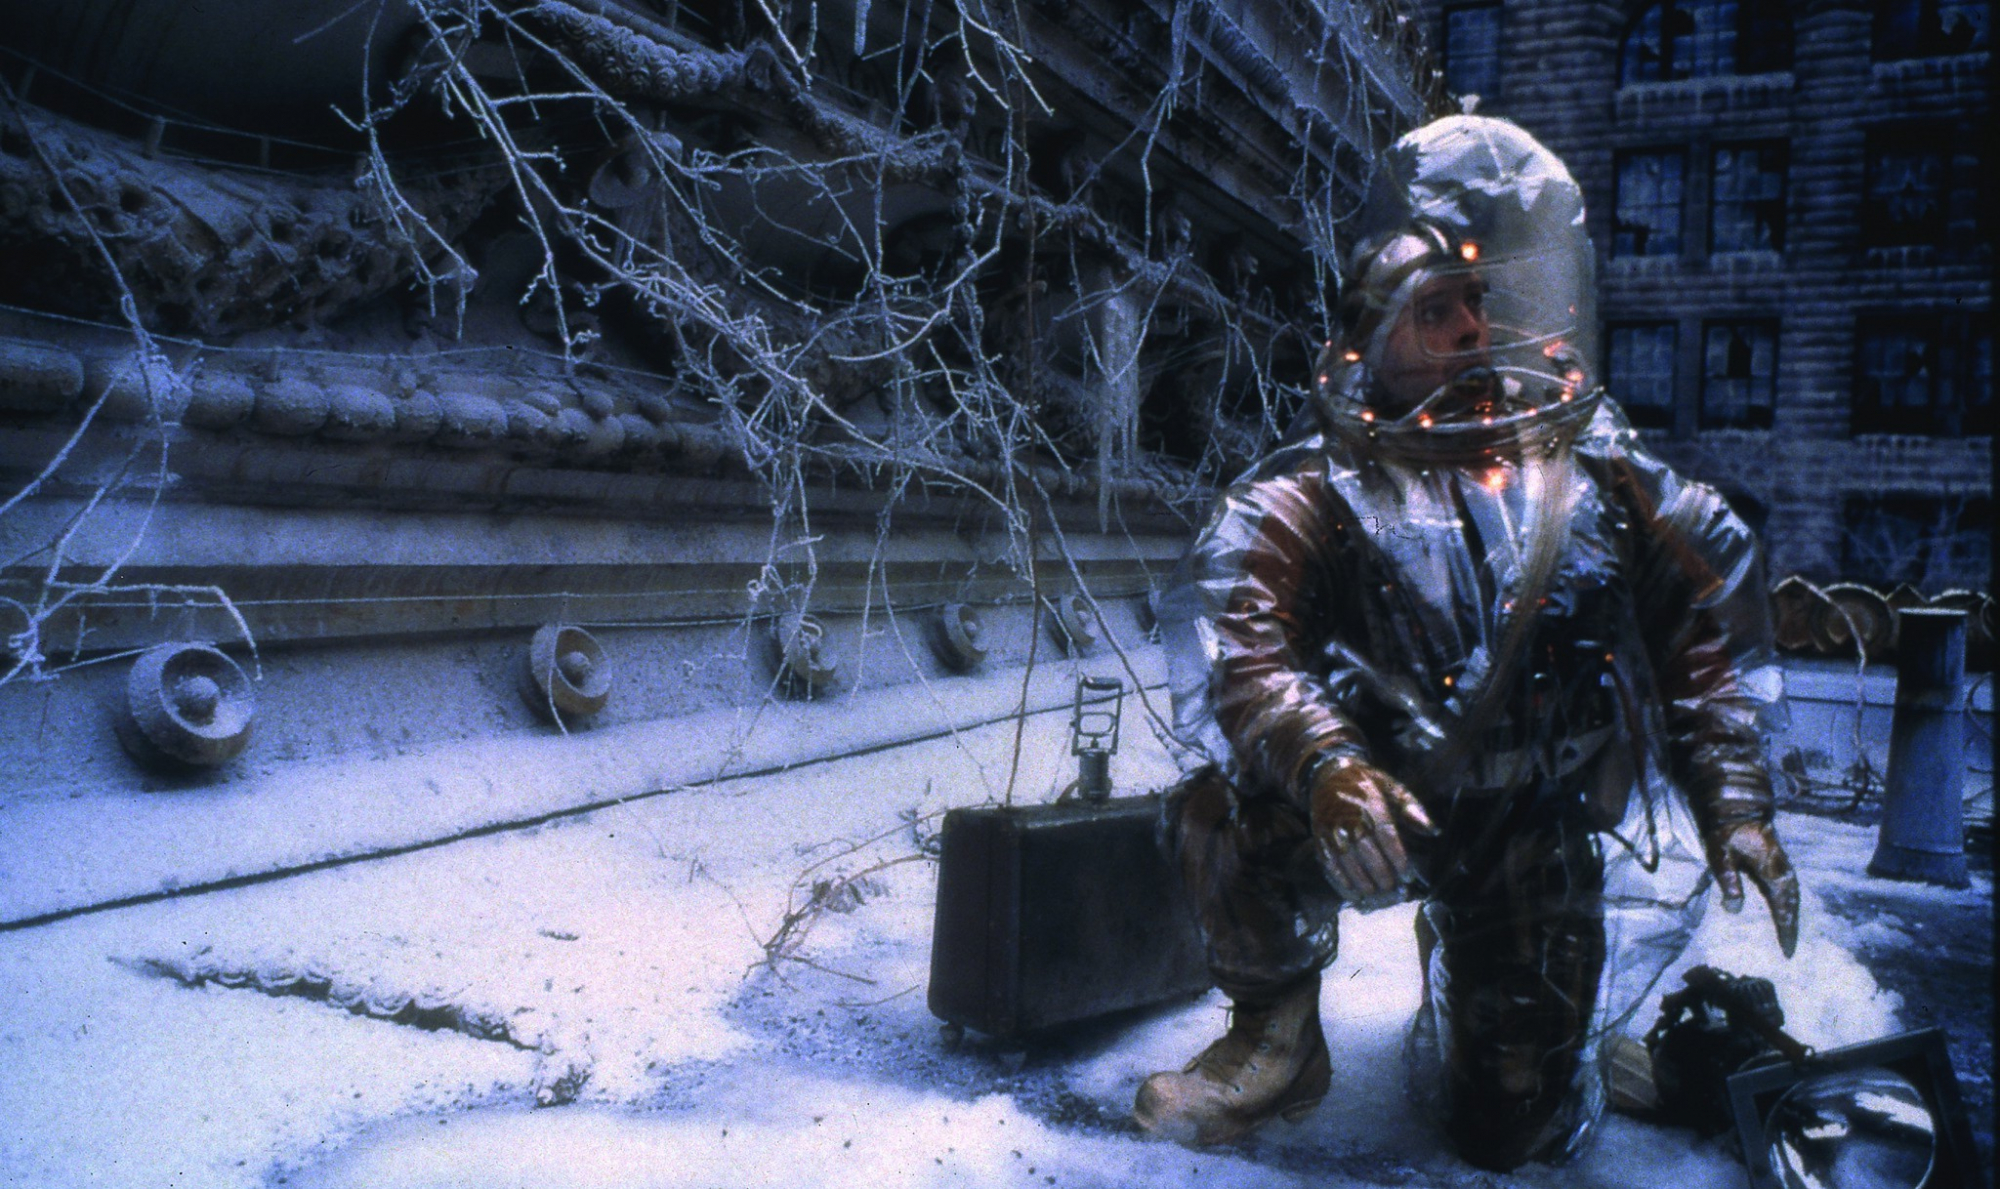 Bruce Willis kneels in a environmental hazmat suit in the snow in the film, 12 monkeys. 